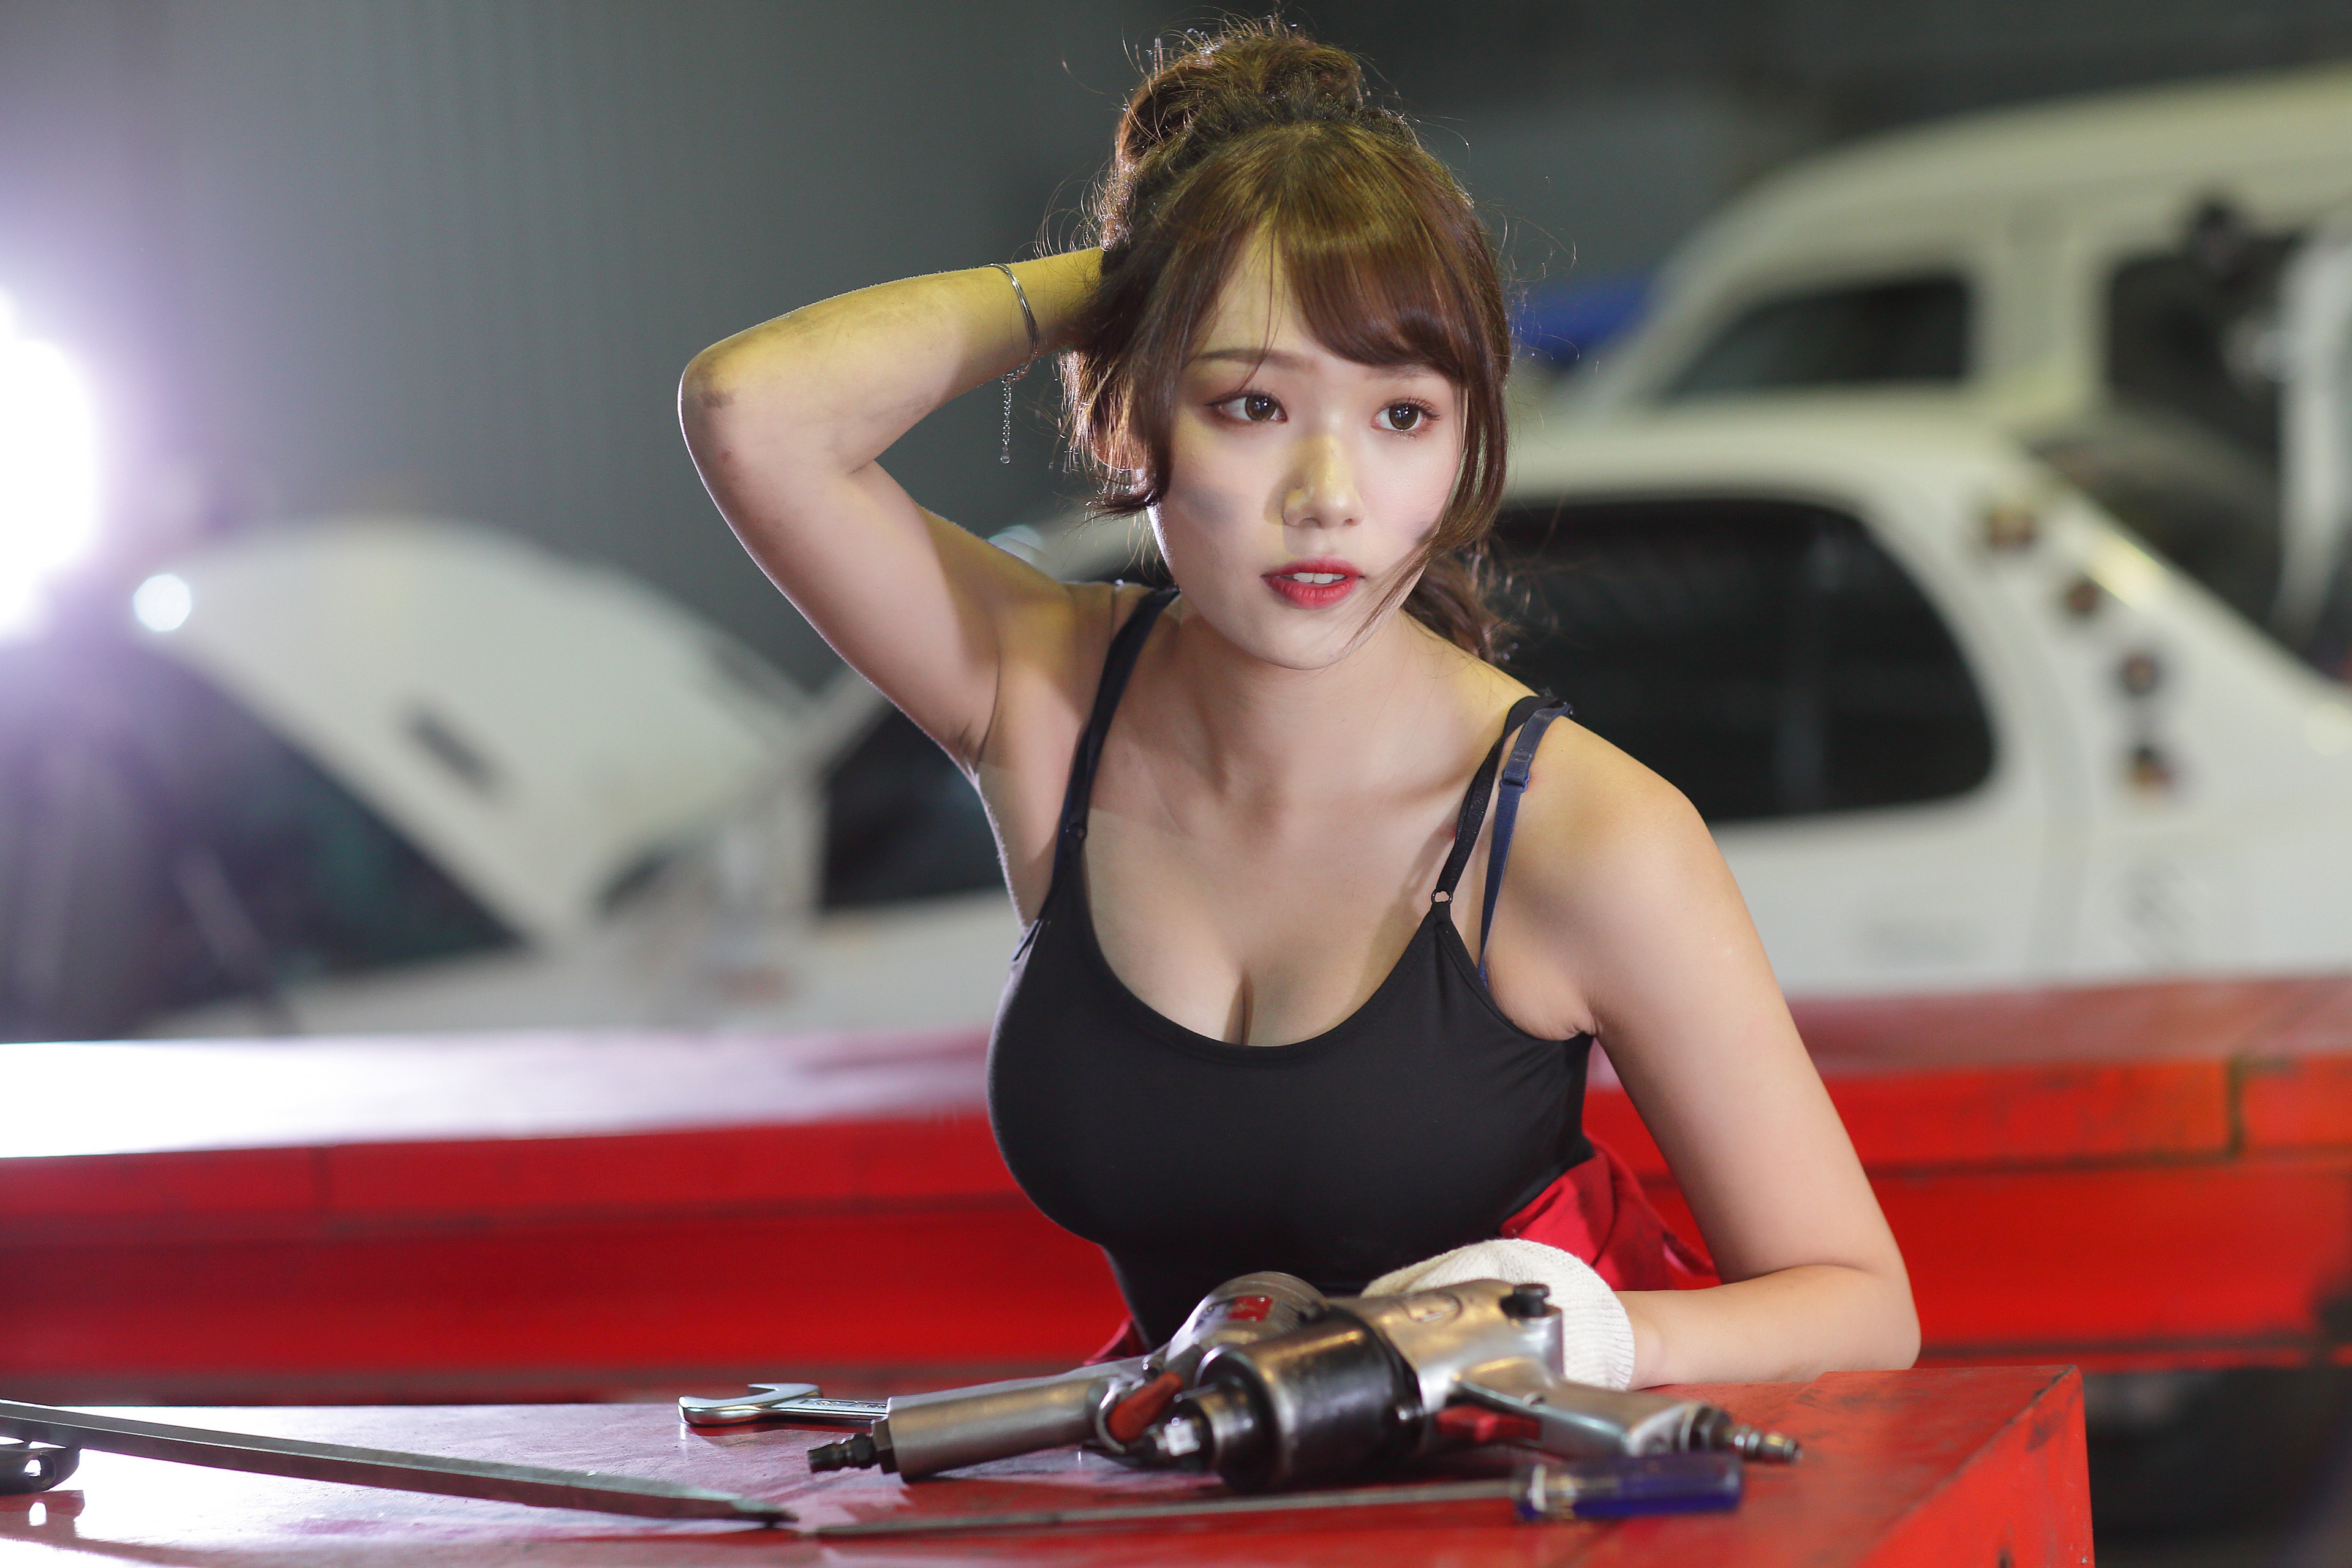 Asian Model Women Long Hair Brunette Black Top Tools Car Depth Of Field Hair Knot 3840x2560